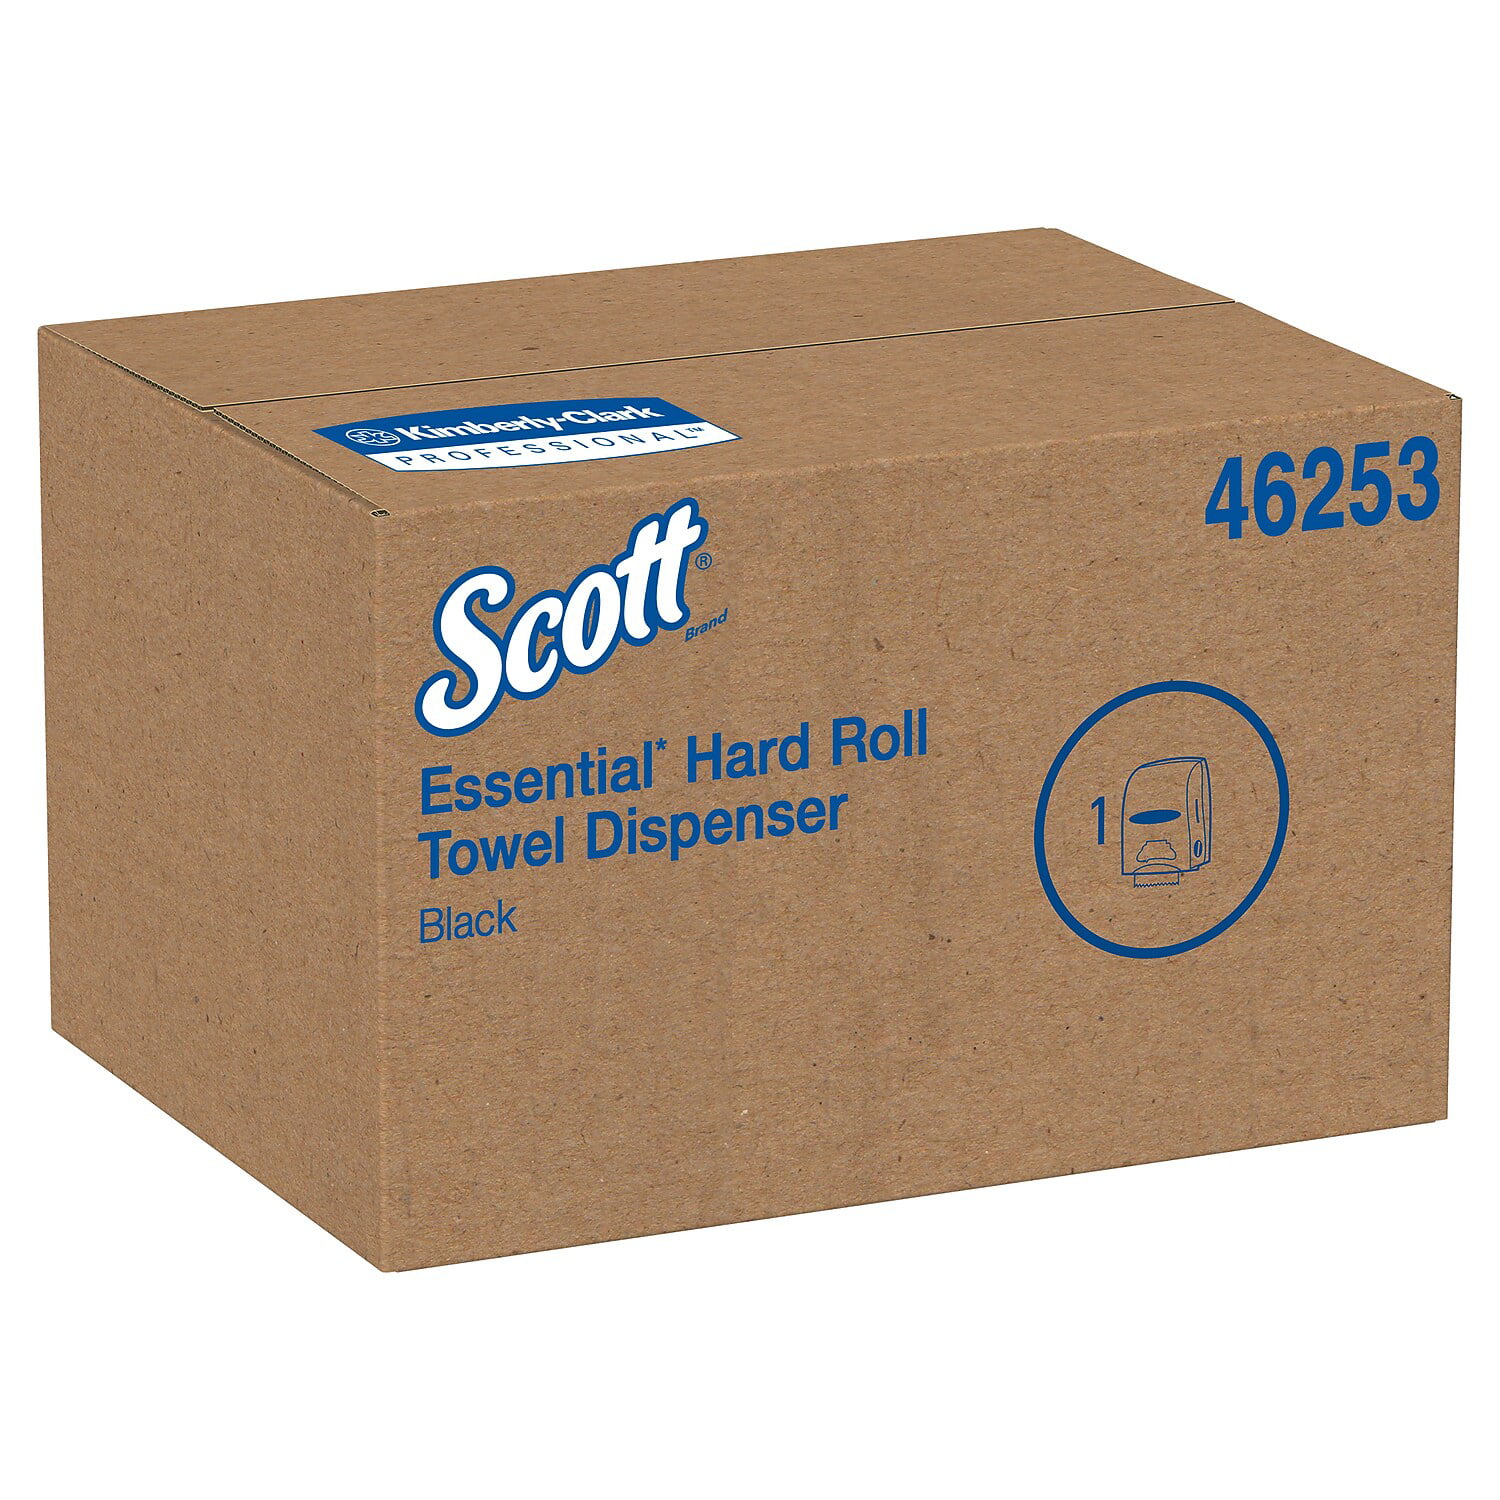 Details about   Scott Essential Hard Roll Towel Dispenser Smoke 46253 Black New!! 